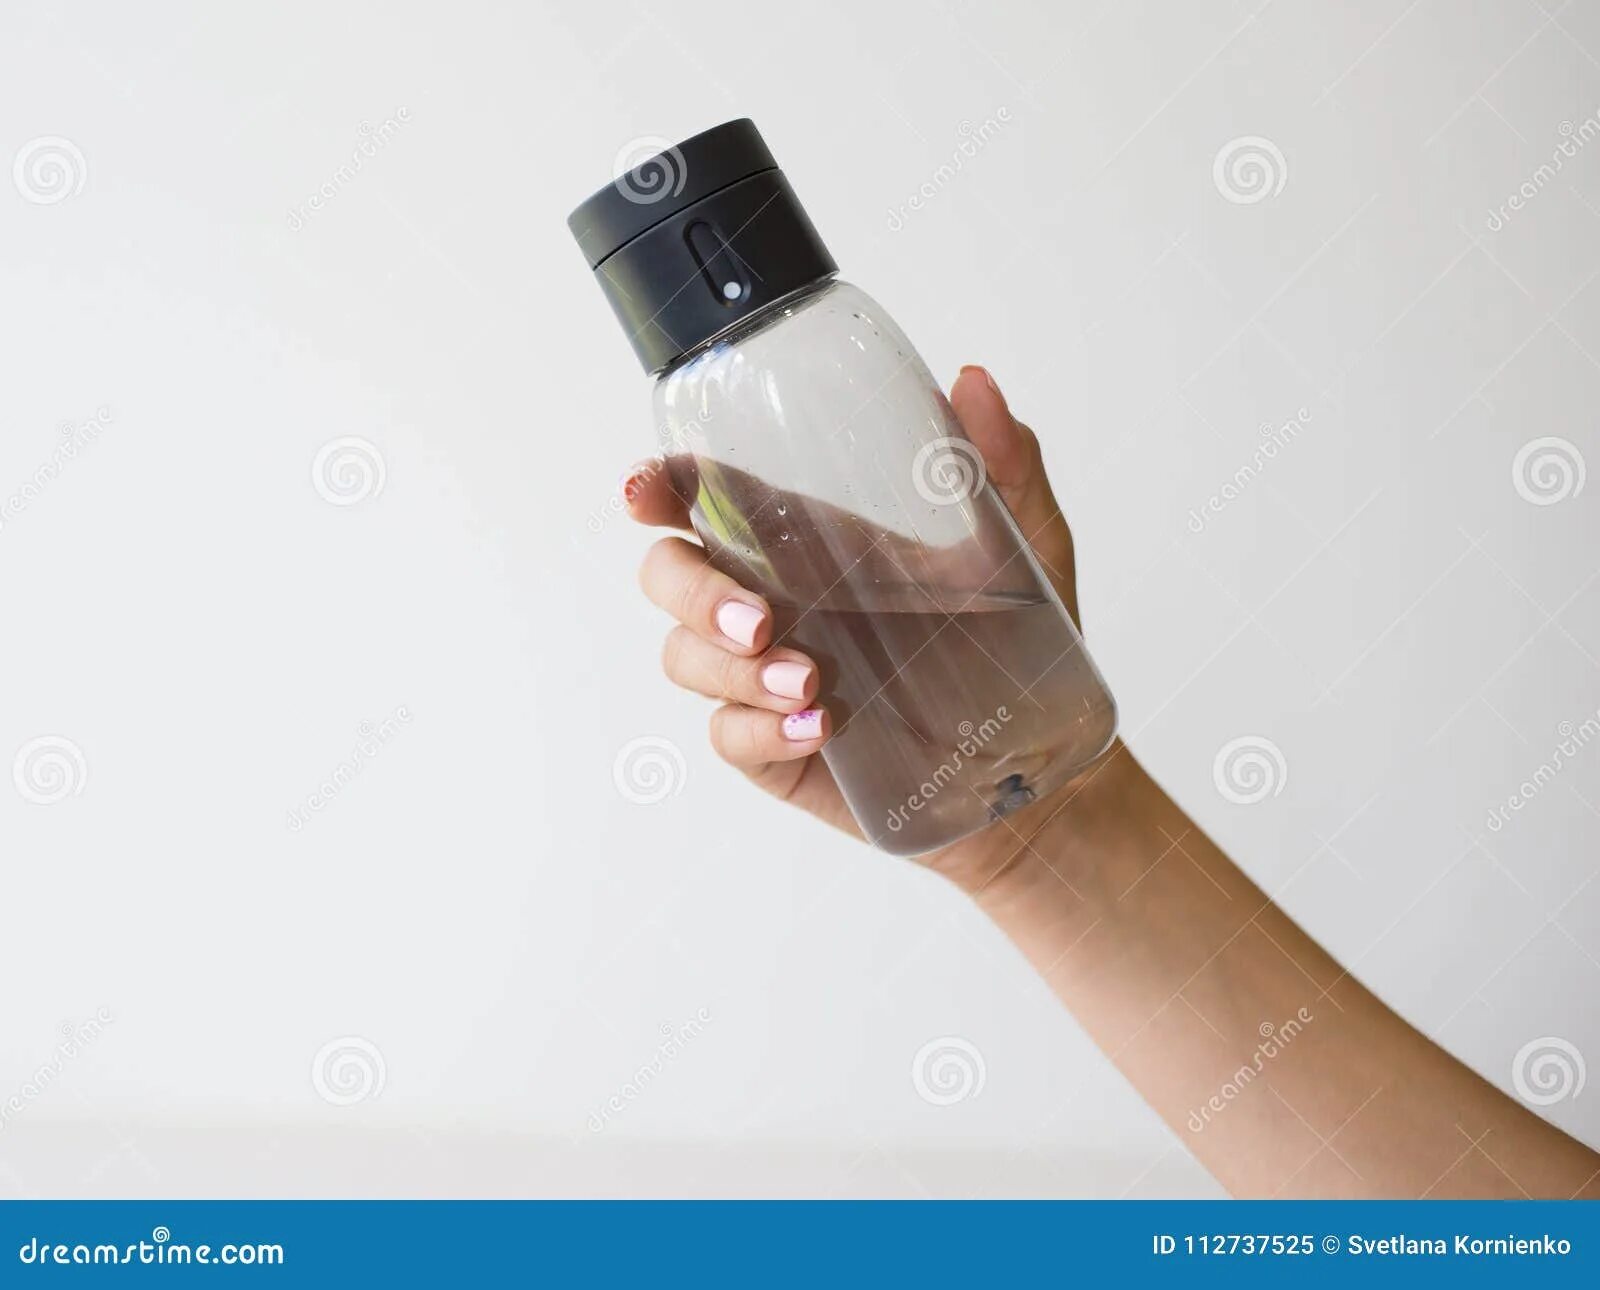 Бутылка воды в руке. Бутылки пластик руками. Бутылка в руке. Пластиковая бутылка для воды в руках.